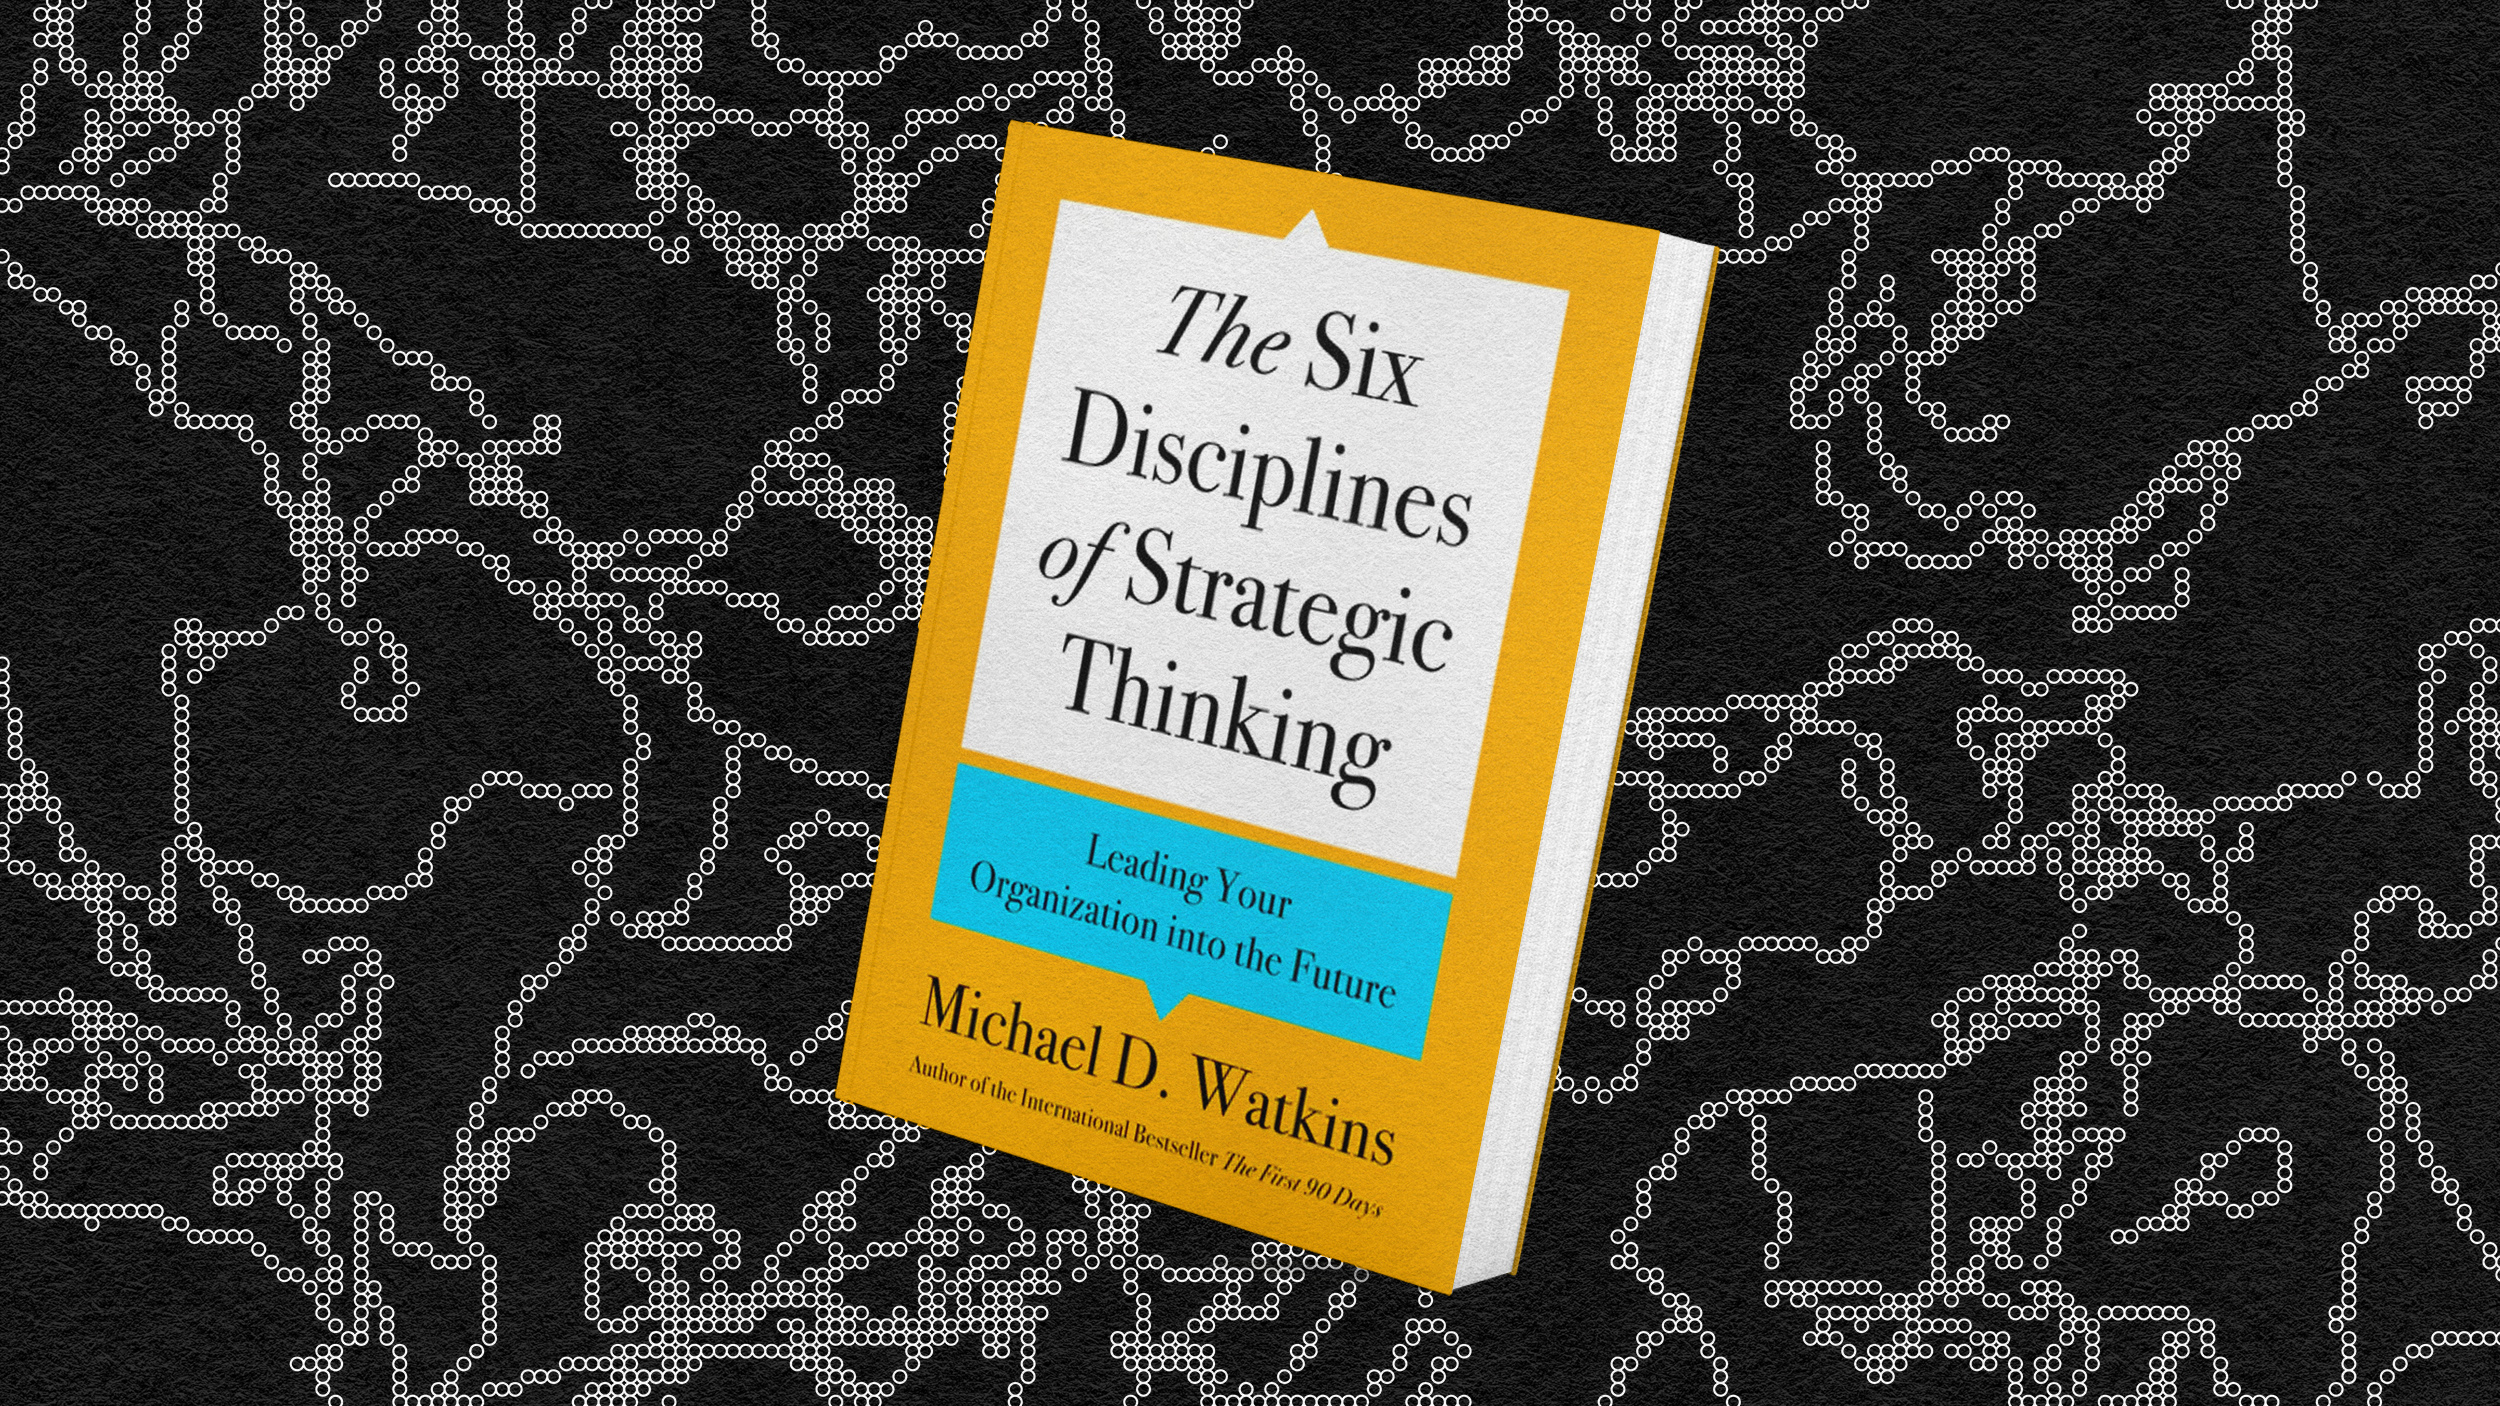 The six disciplines of strategic thinking.